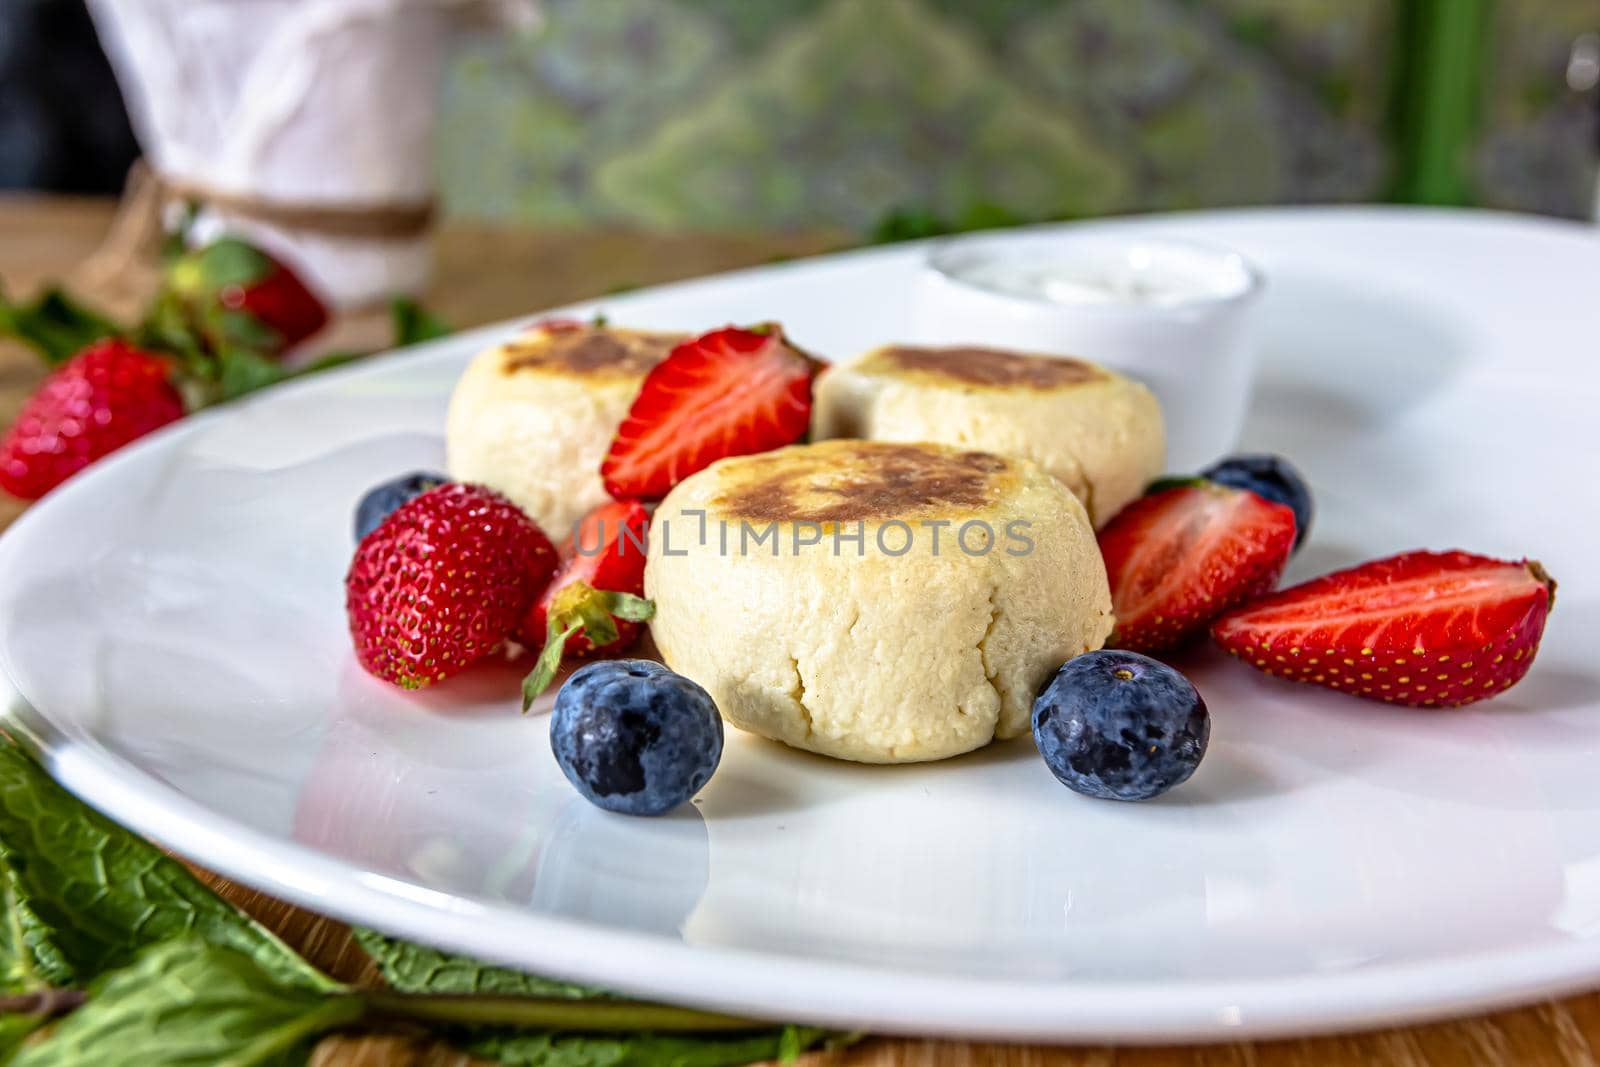 Homemade cheesecake with fresh strawberries and blueberries dessert - healthy organic summer dessert pie cheesecake. Vanilla Cheese Cake by Milanchikov